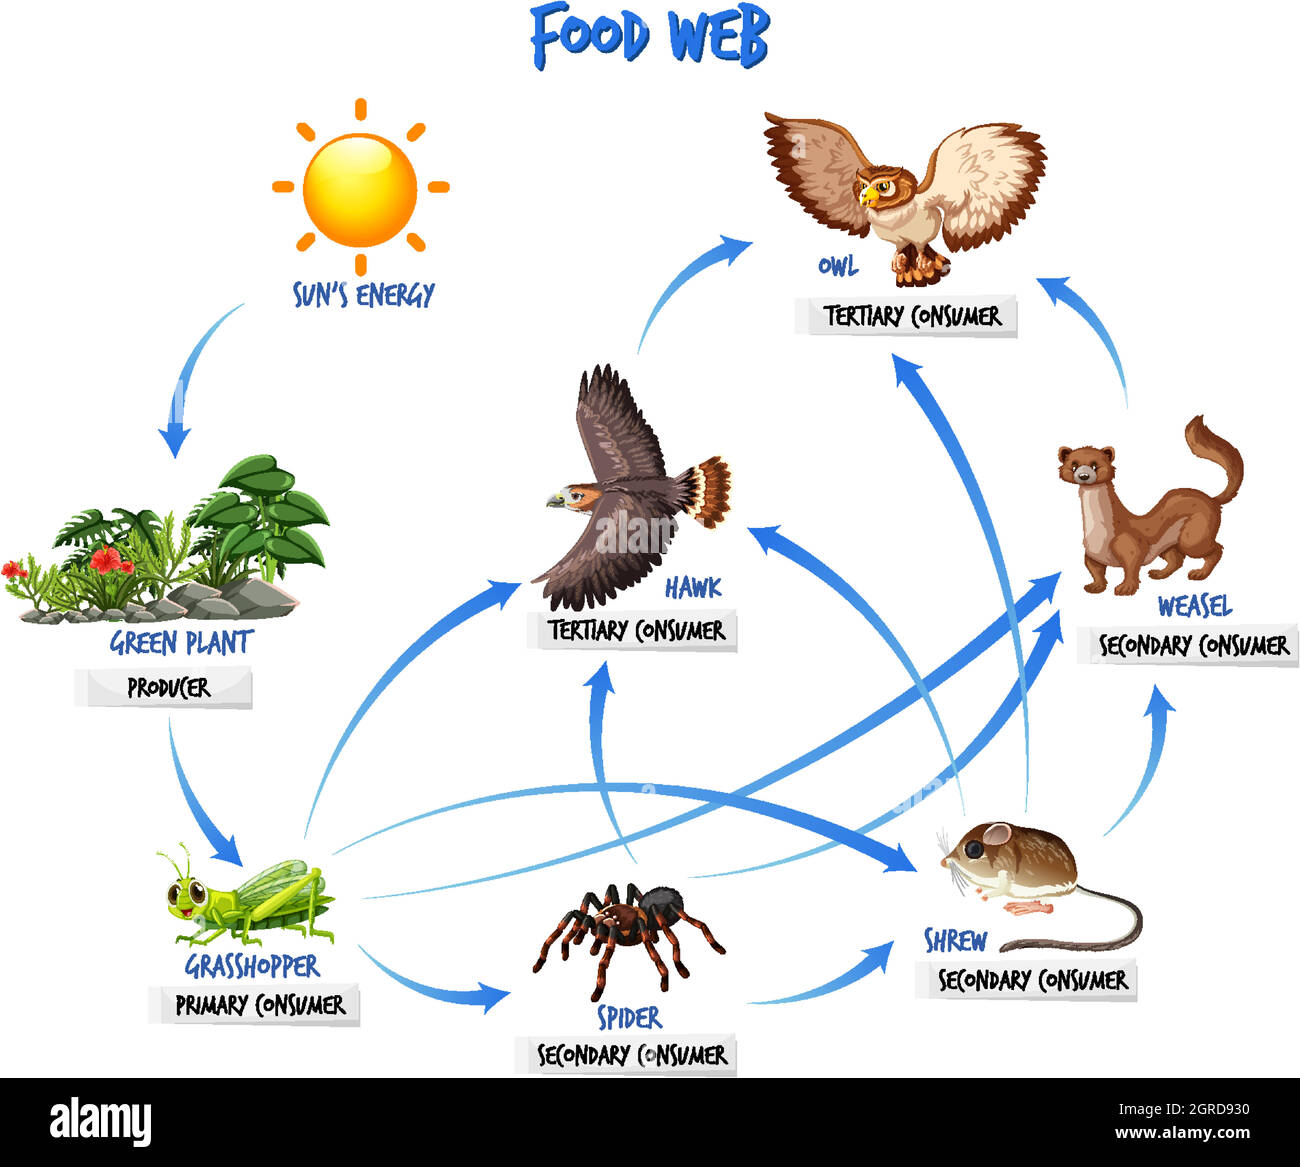 Food chain diagram concept Stock Vector